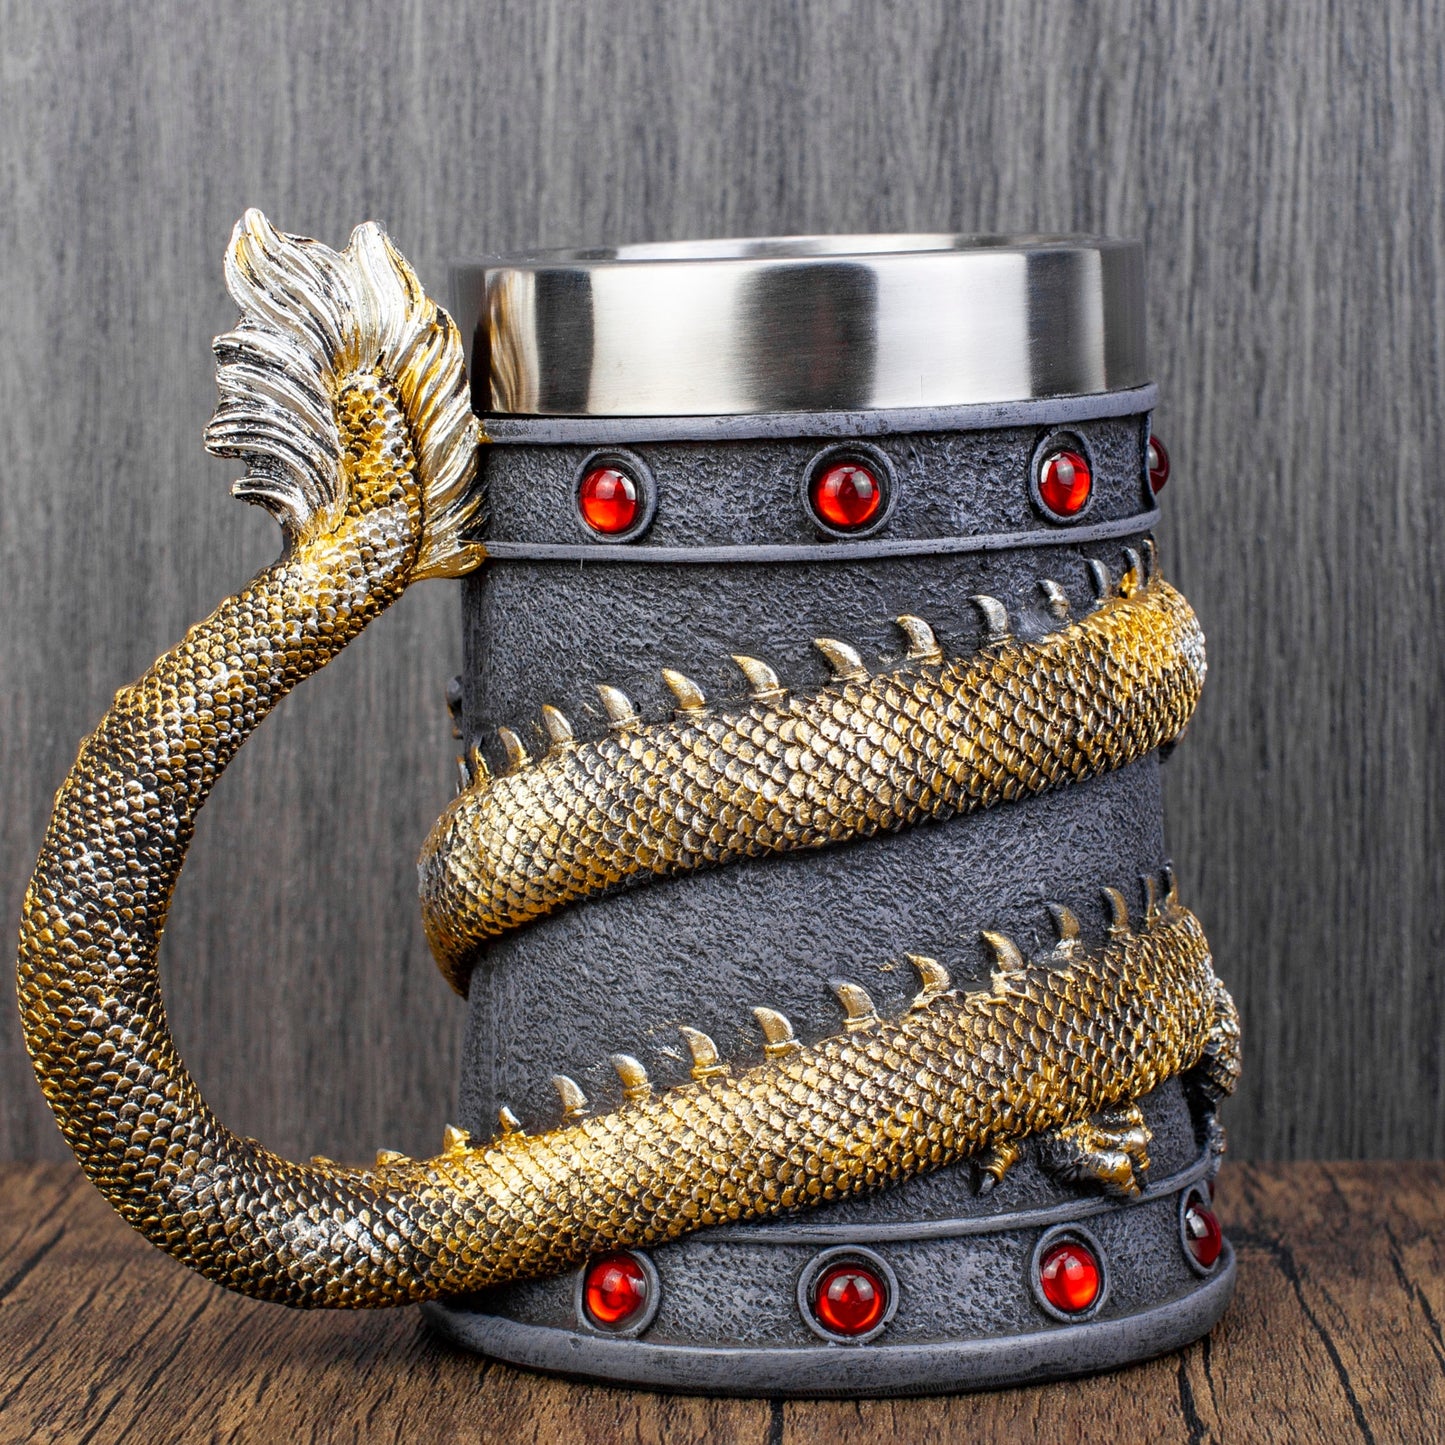 Mighty dragon tankard mug in gold color